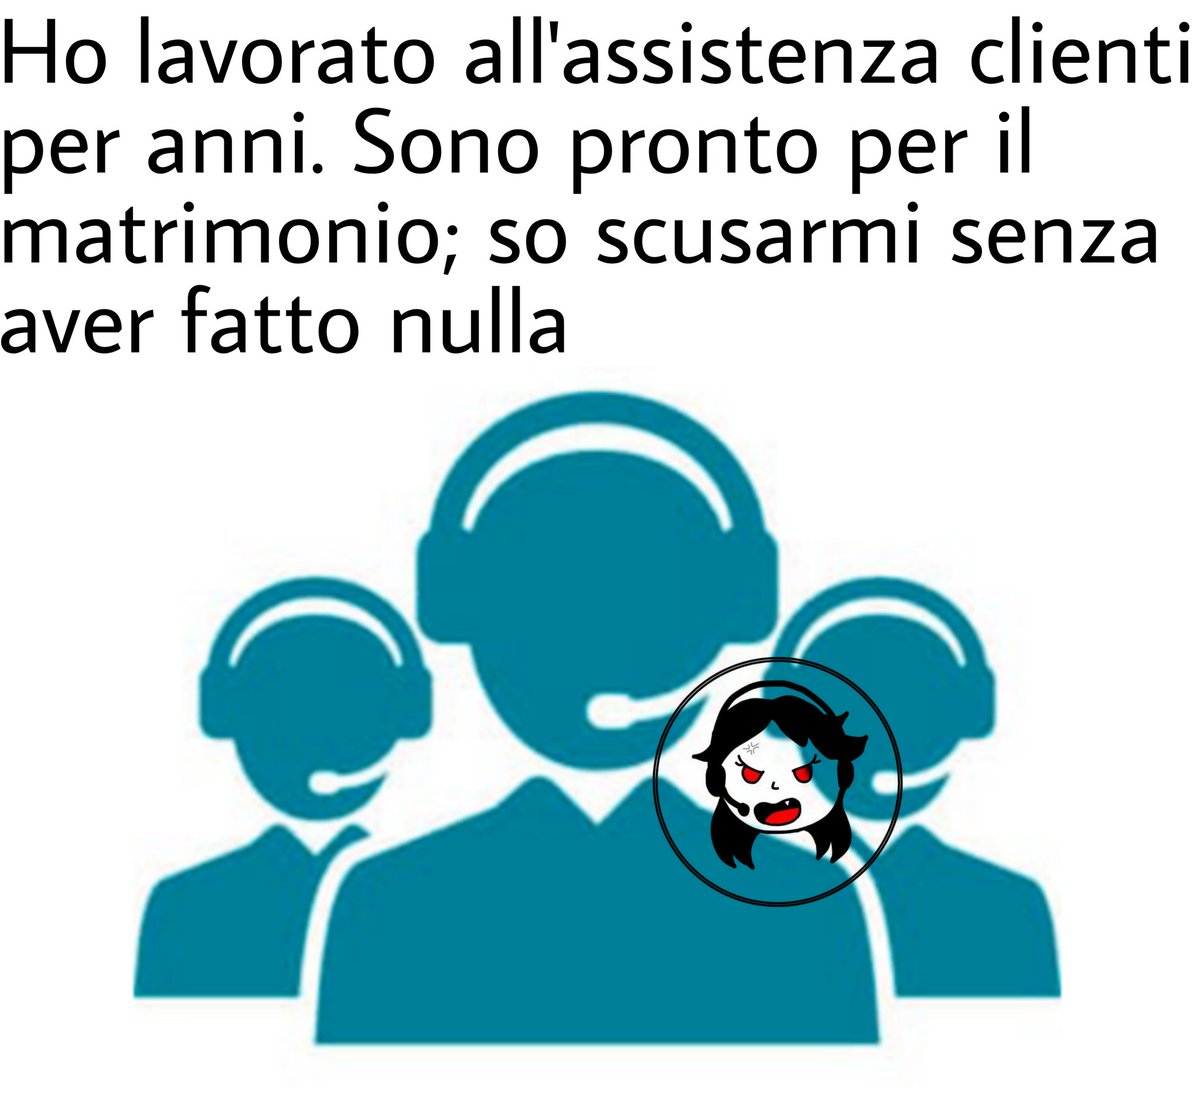 Assistenza Clienti (@AssClienti) on Twitter photo 2023-05-27 07:19:56